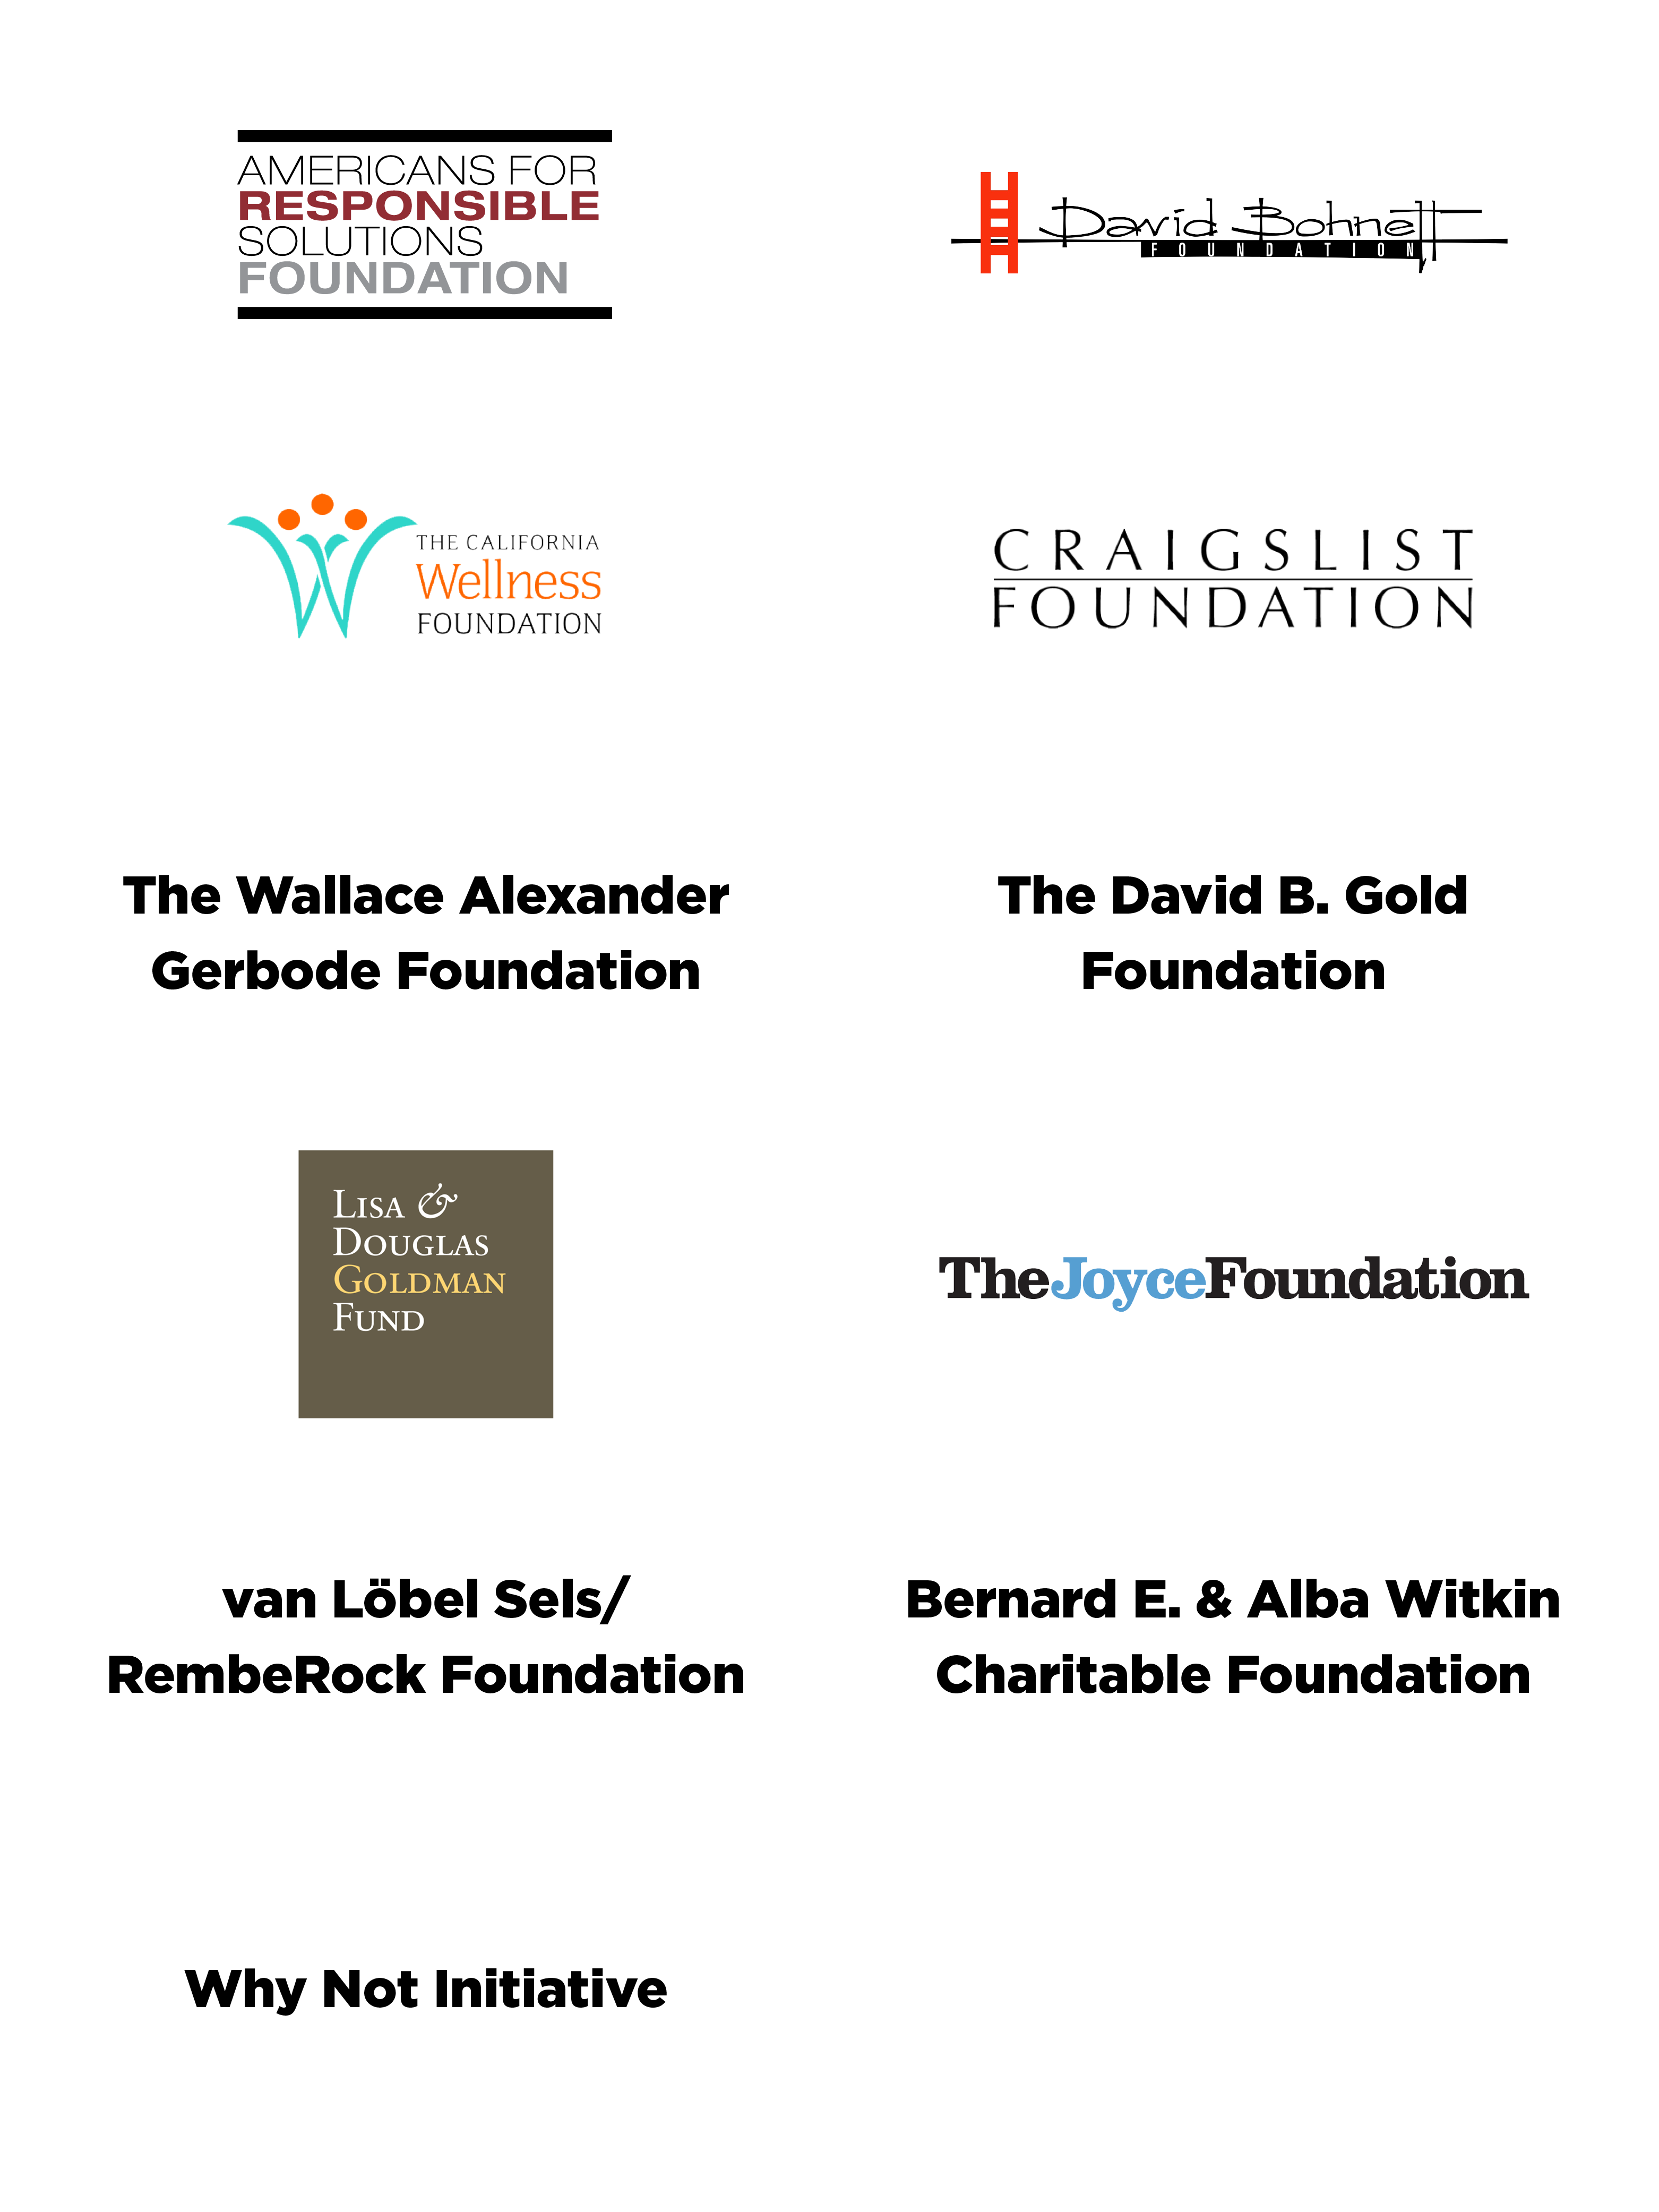 Foundation-logos